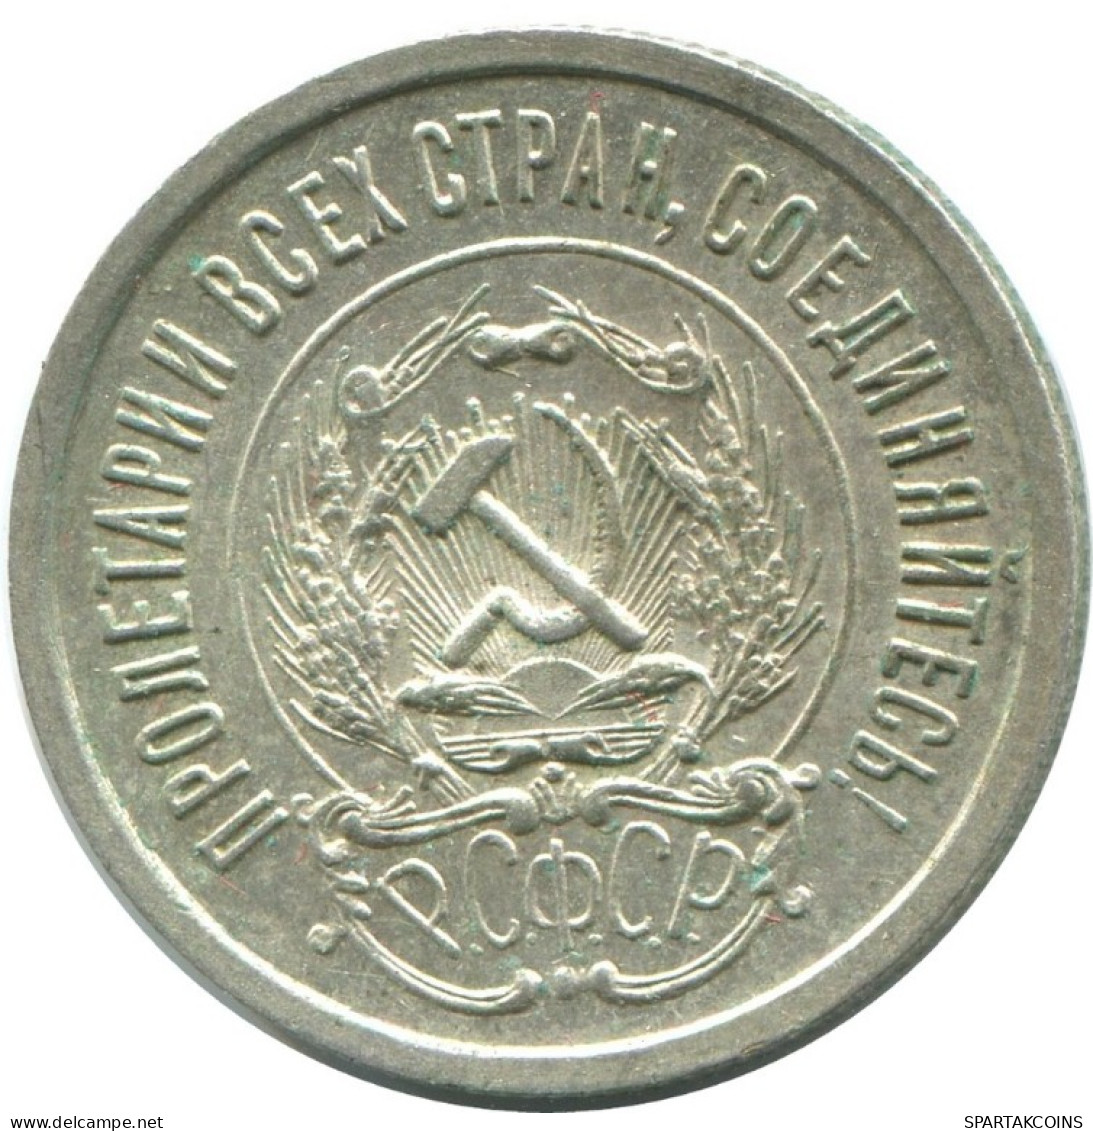 20 KOPEKS 1923 RUSSLAND RUSSIA RSFSR SILBER Münze HIGH GRADE #AF659.D.A - Russie